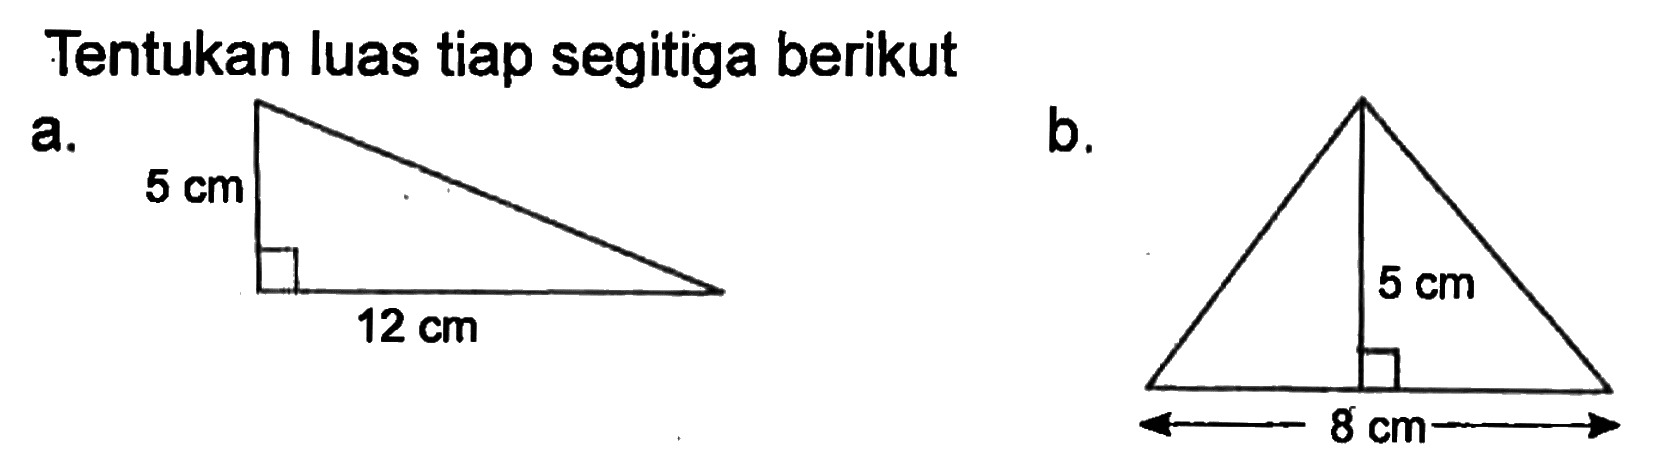 Tentukan luas tiap segitiga berikut a. 5 cm 12 cm b. 5 cm 8 cm